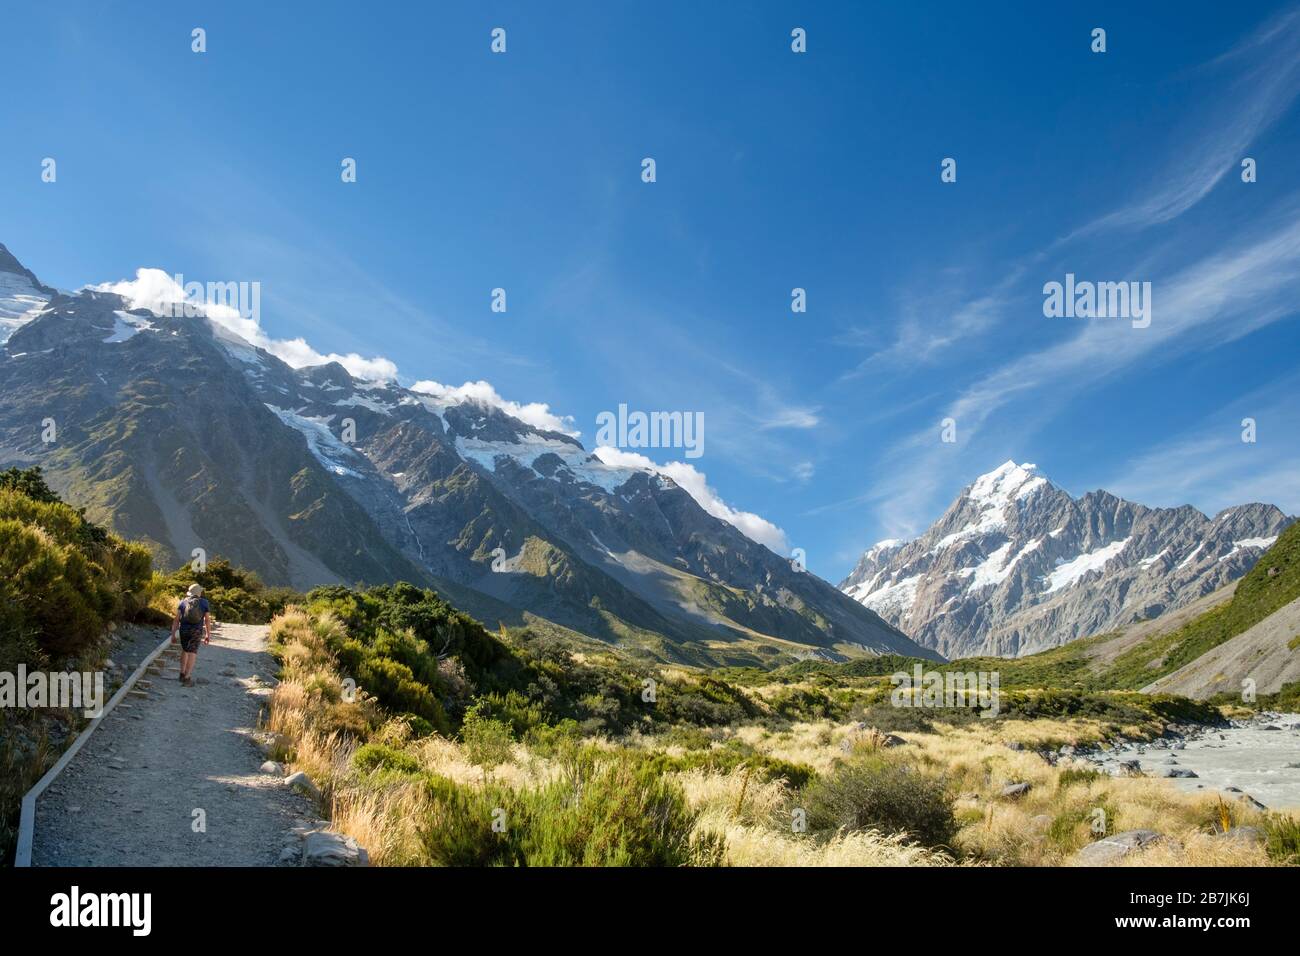 Uomo su sentiero con ghiacciai e montagne innevate, Hooker Track, Aoraki/Mount Cook National Park, South Island, Nuova Zelanda Foto Stock